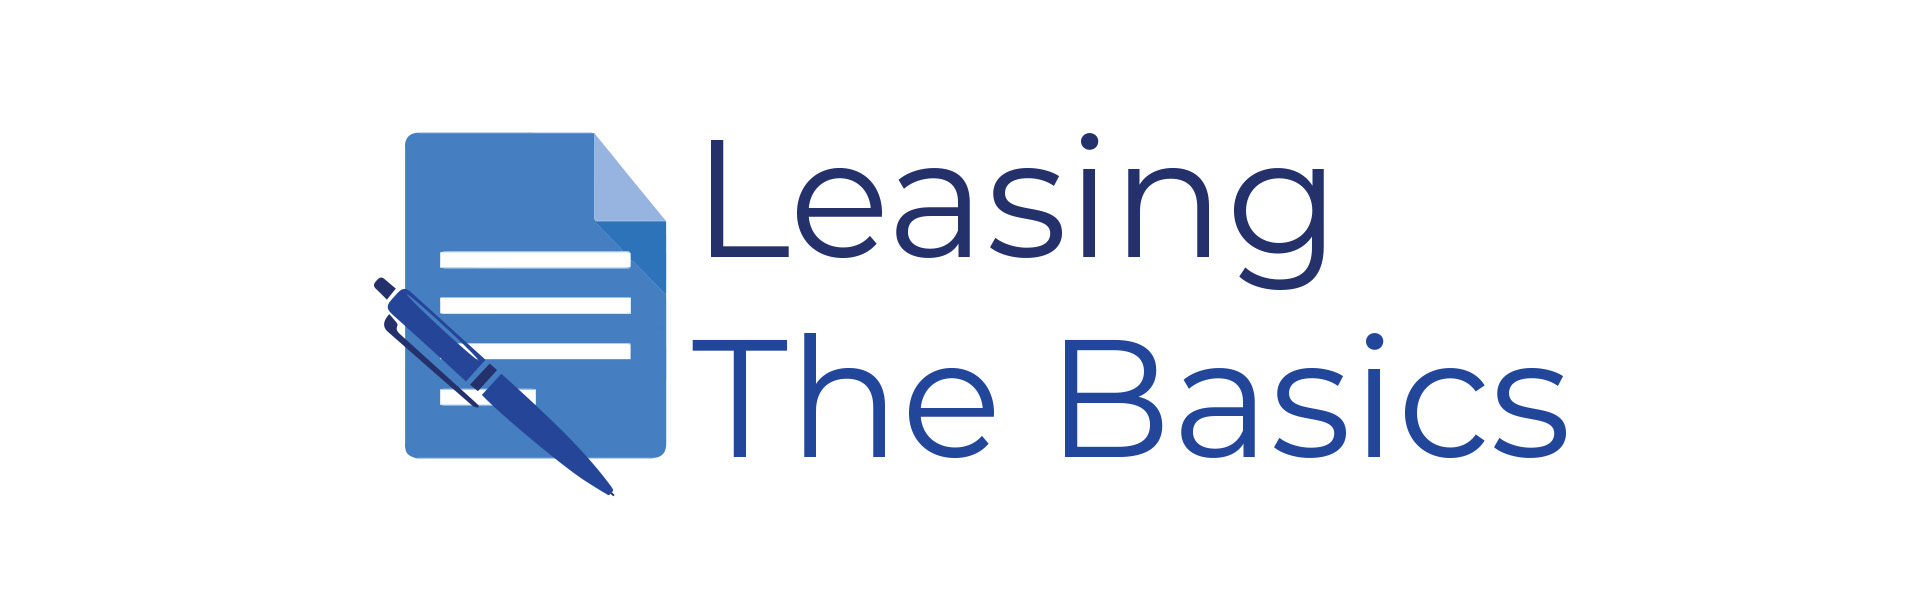 Leasing - The Basics